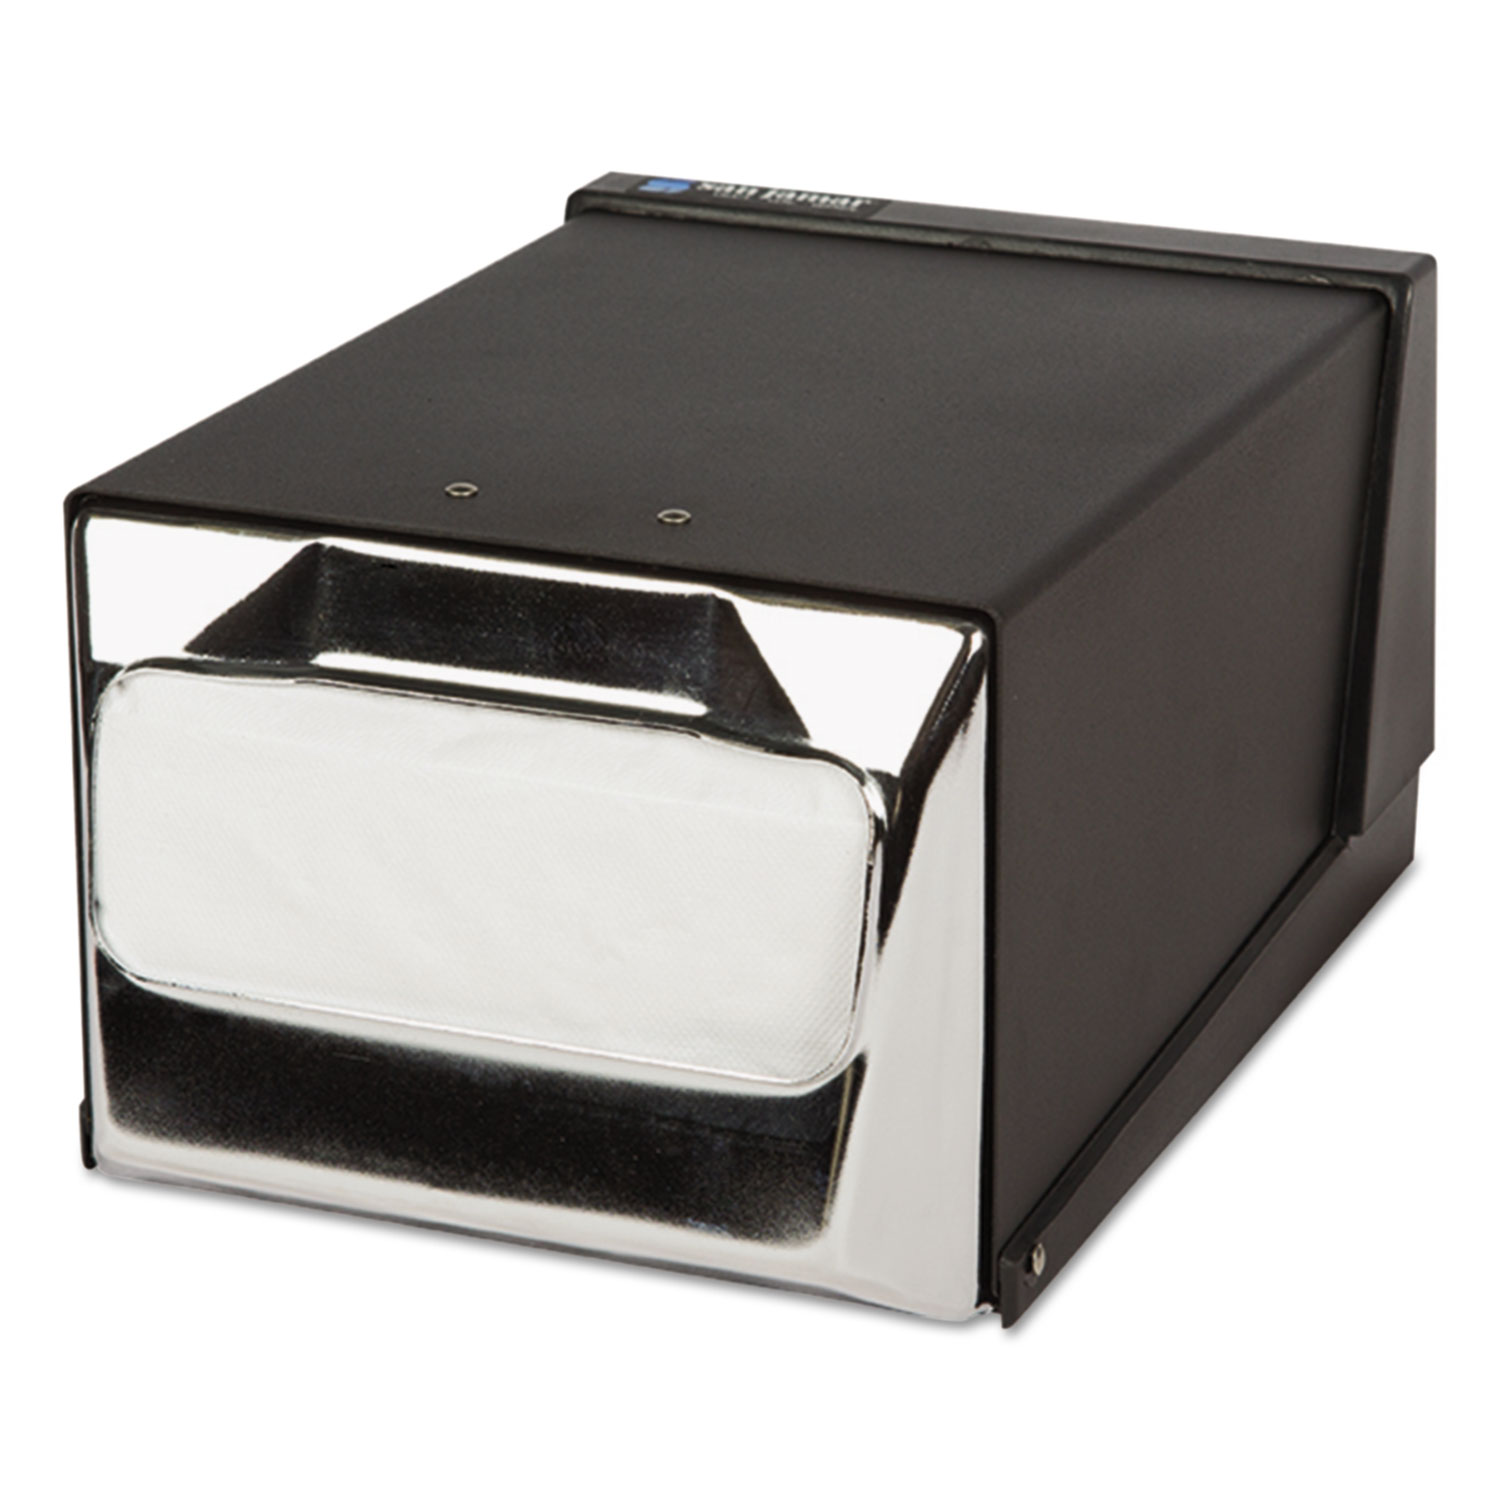 Countertop Napkin Dispenser, 7 5/8 x 11 x 5 1/2, Capacity: 300 Napkins, Black